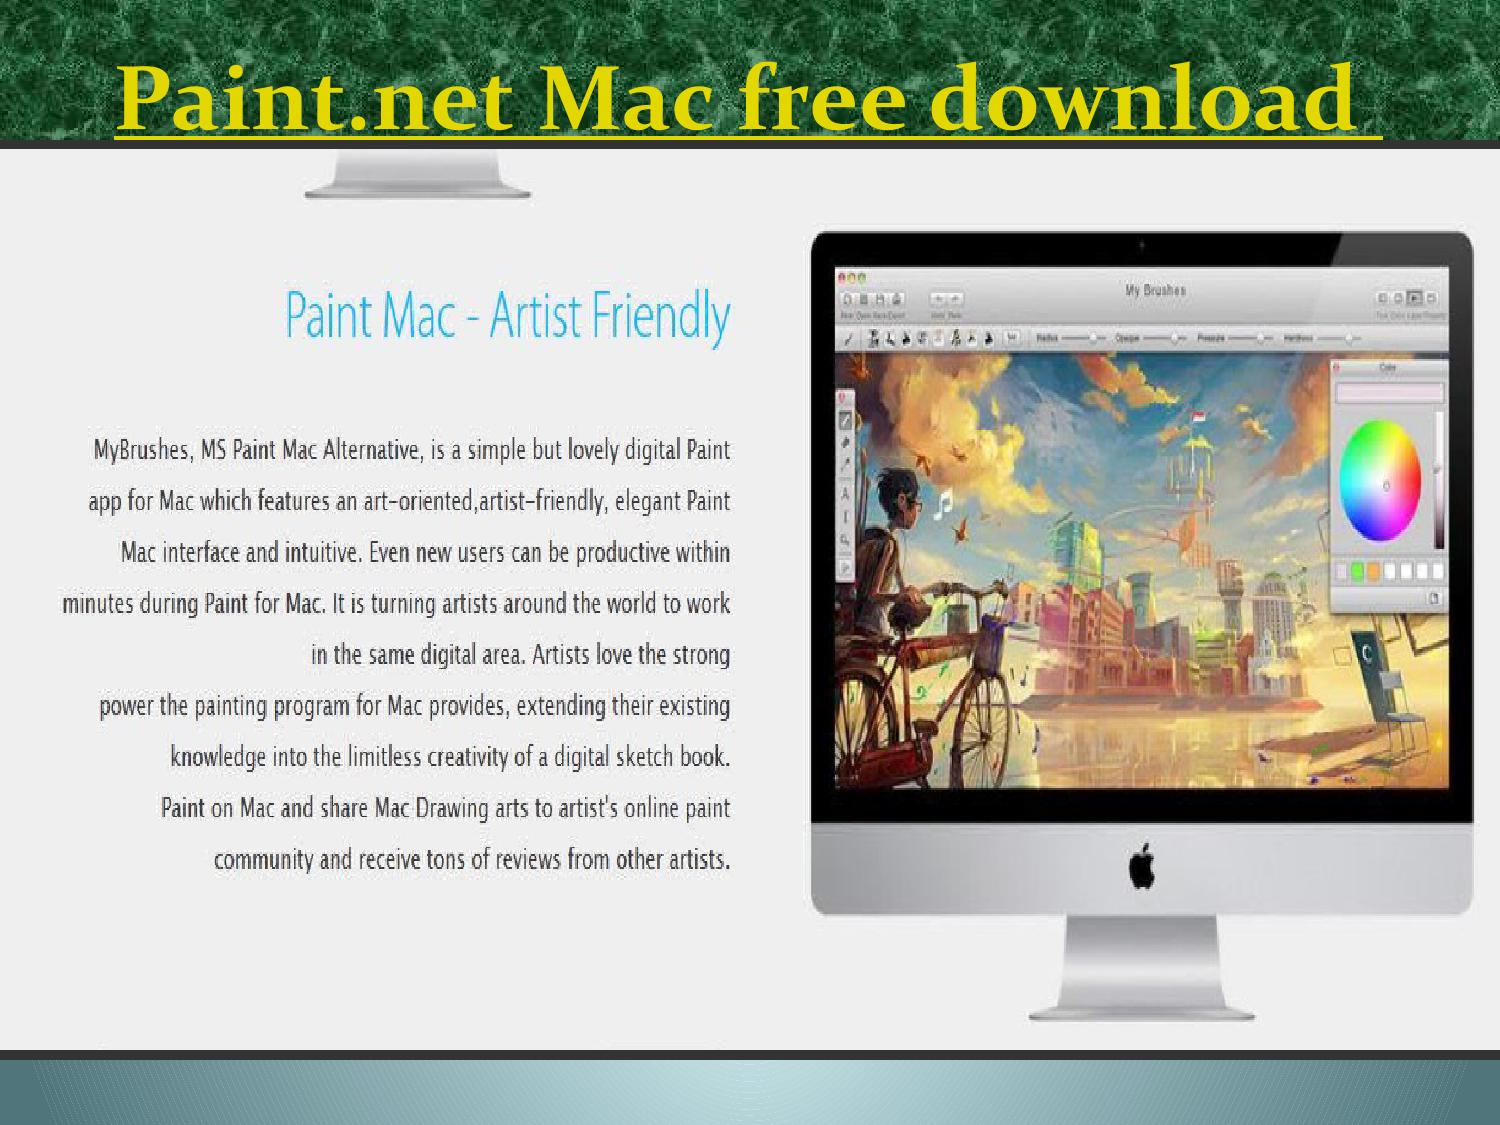 Paint.net dowload for mac